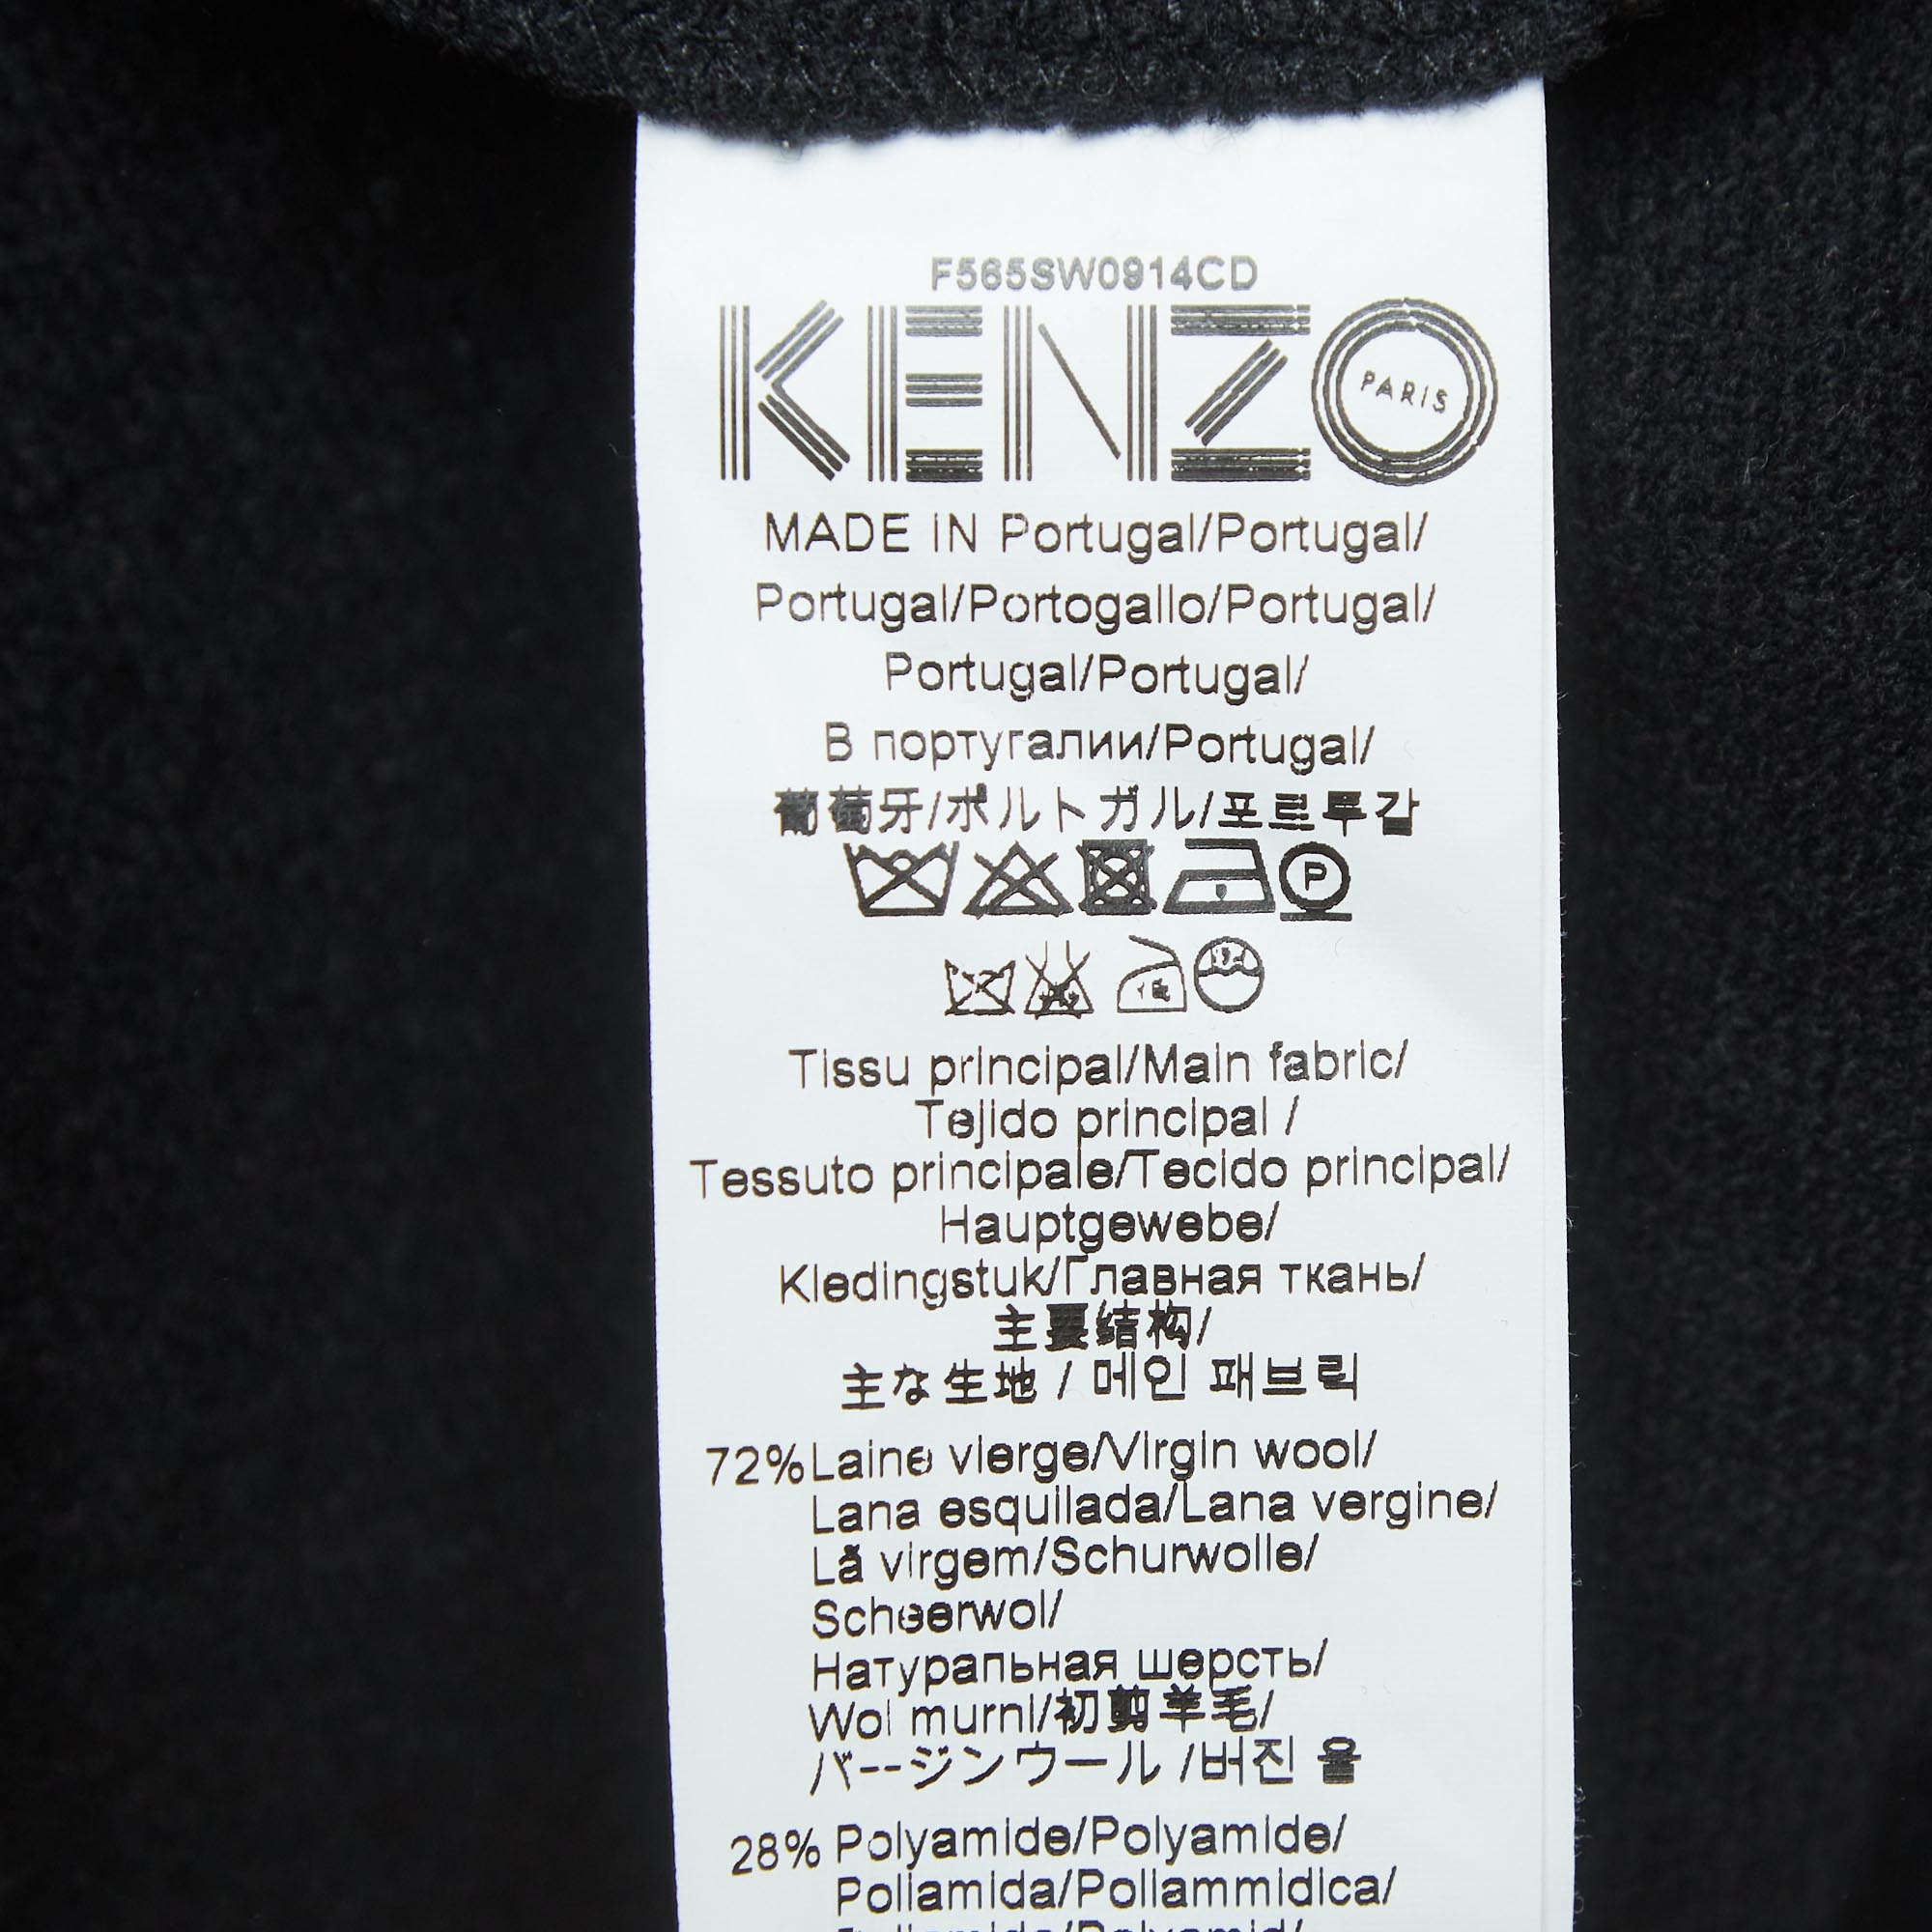 Kenzo Black Logo Embroidered Wool Blend Crew Neck Sweatshirt M